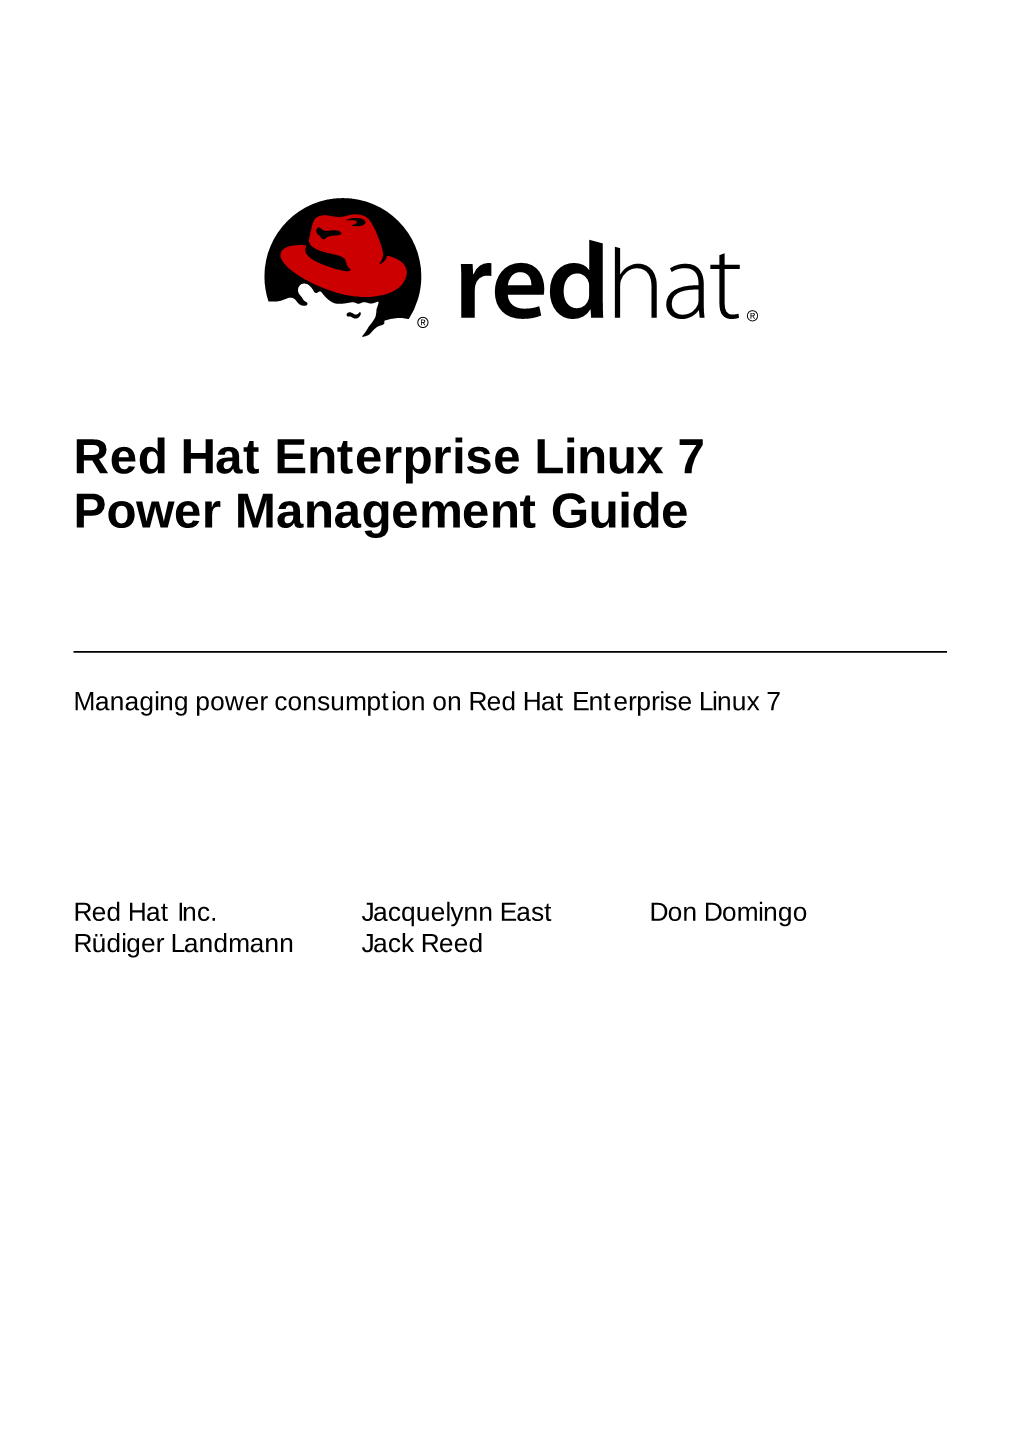 Red Hat Enterprise Linux 7 Power Management Guide